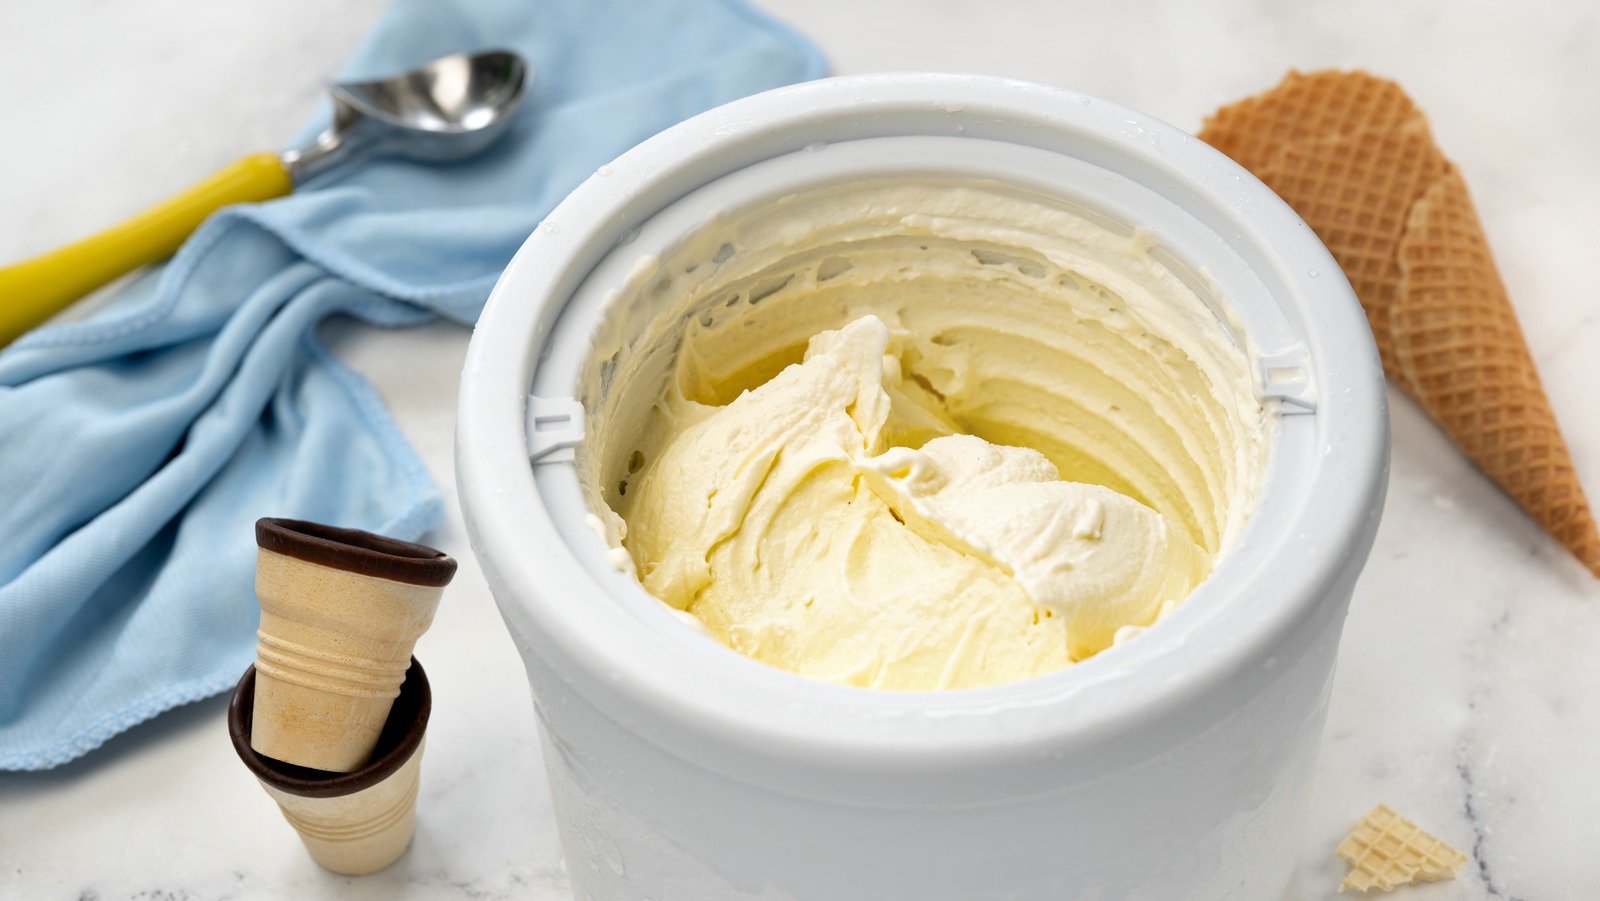 Stabilizer system for Vanilla Ice Cream 